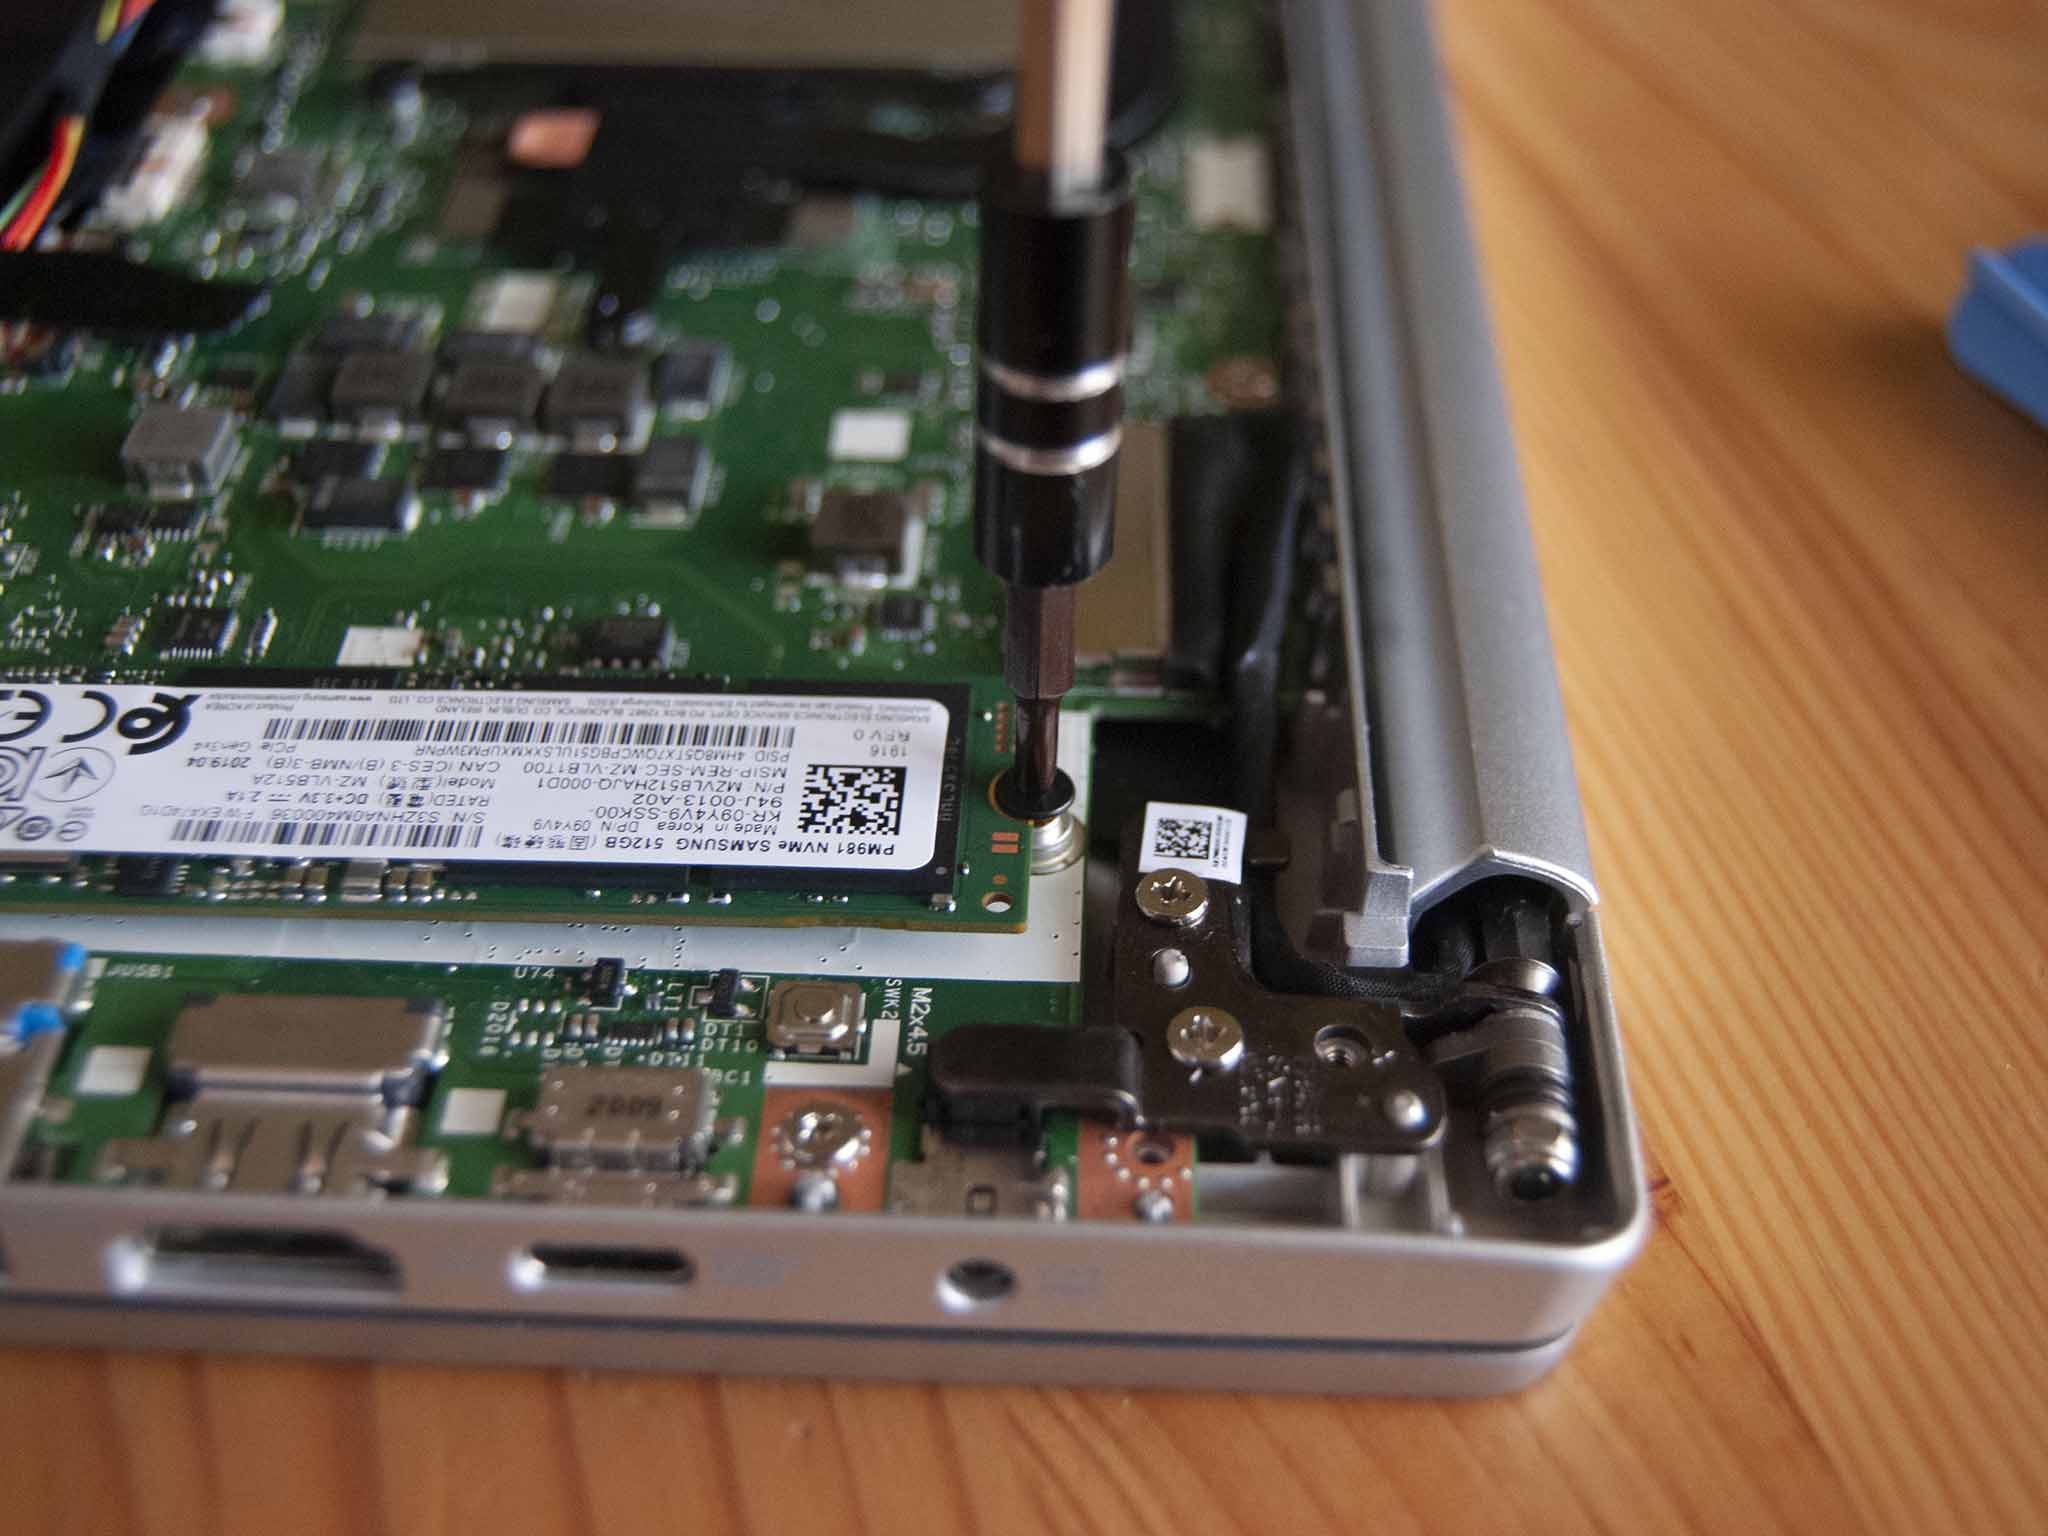 Screw in the SSD fastener